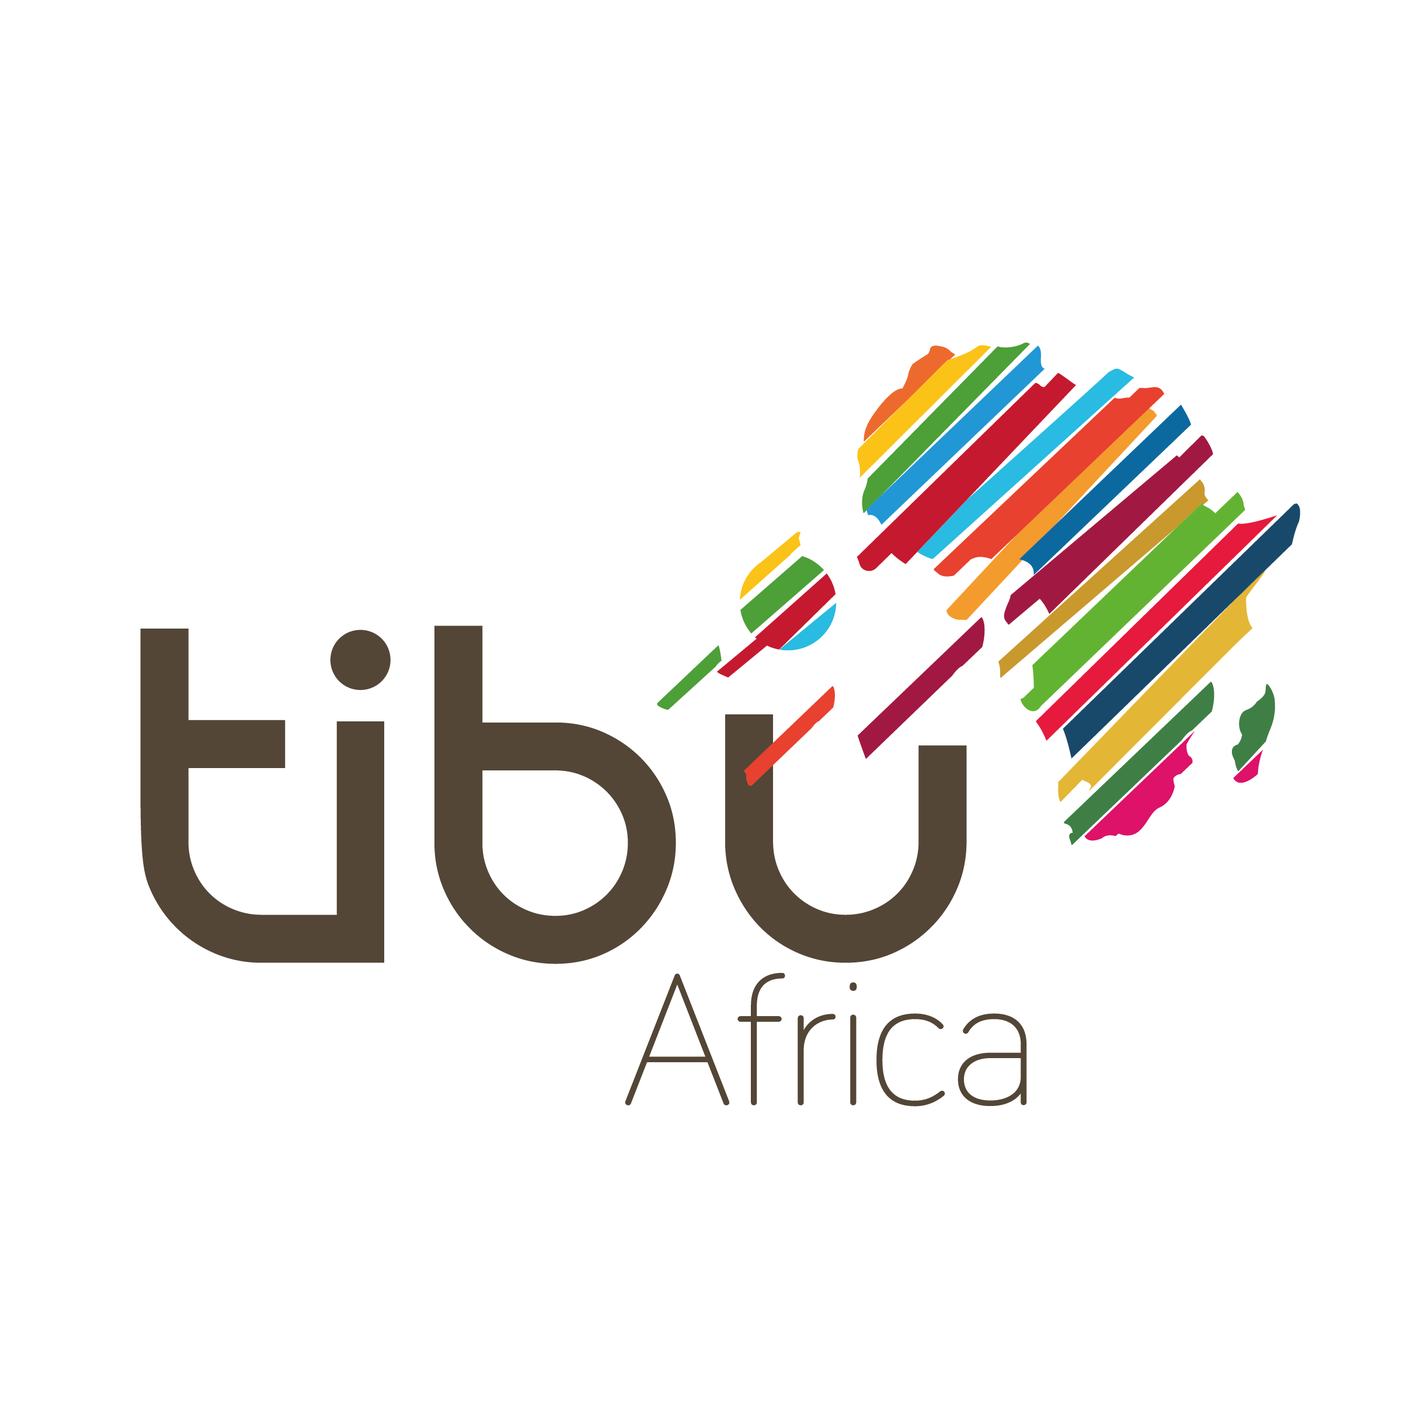 Tibu Africa